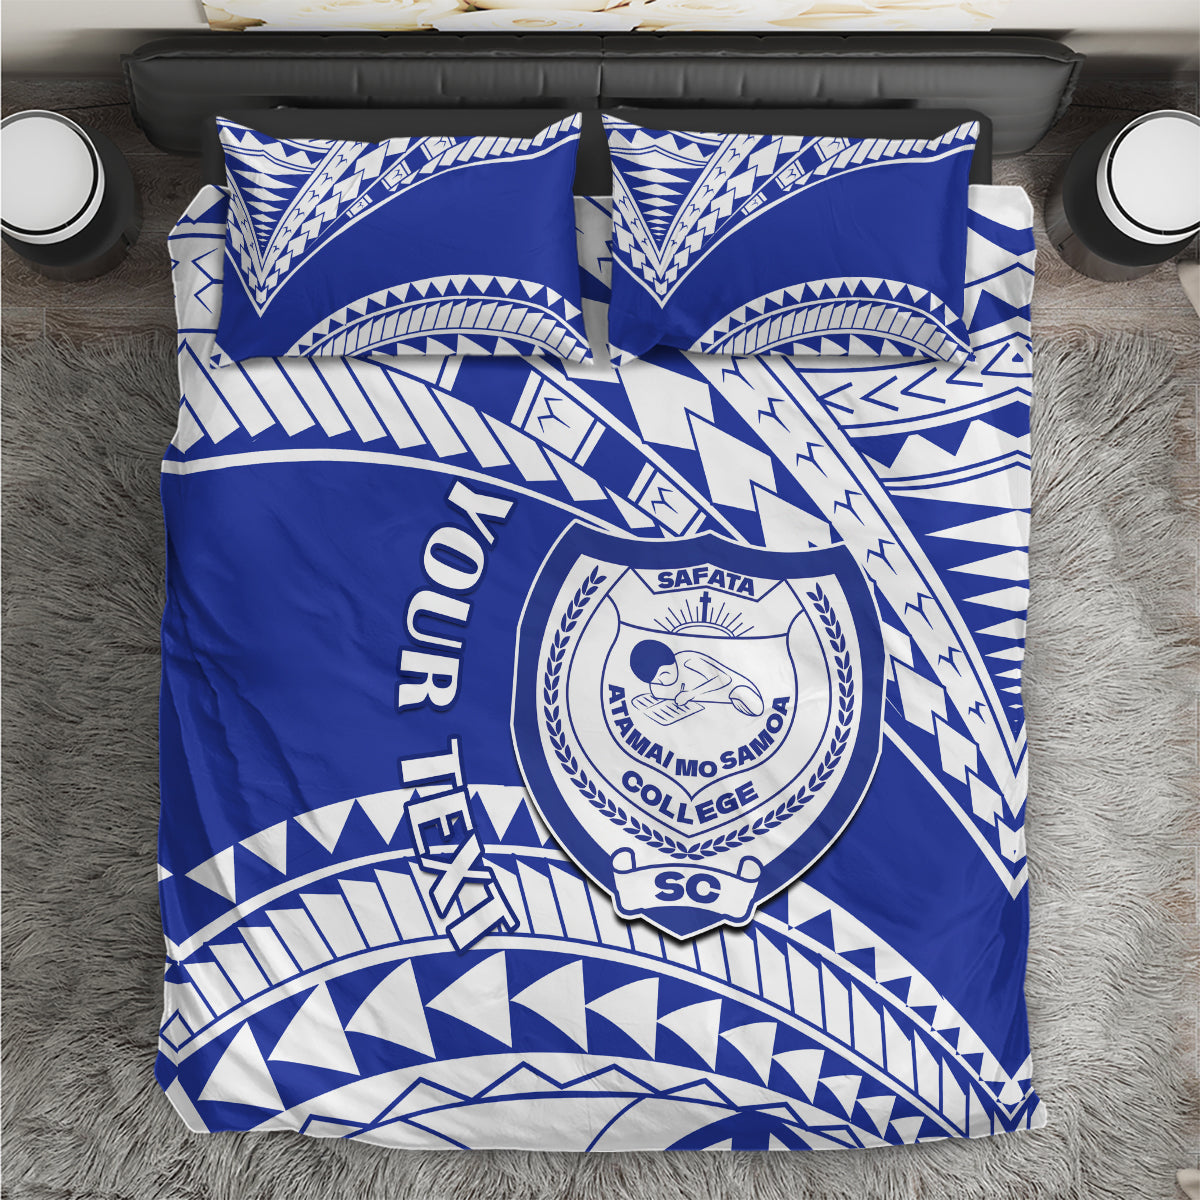 Personalised Samoa Safata College Bedding Set Samoan Pattern LT14 Blue - Polynesian Pride